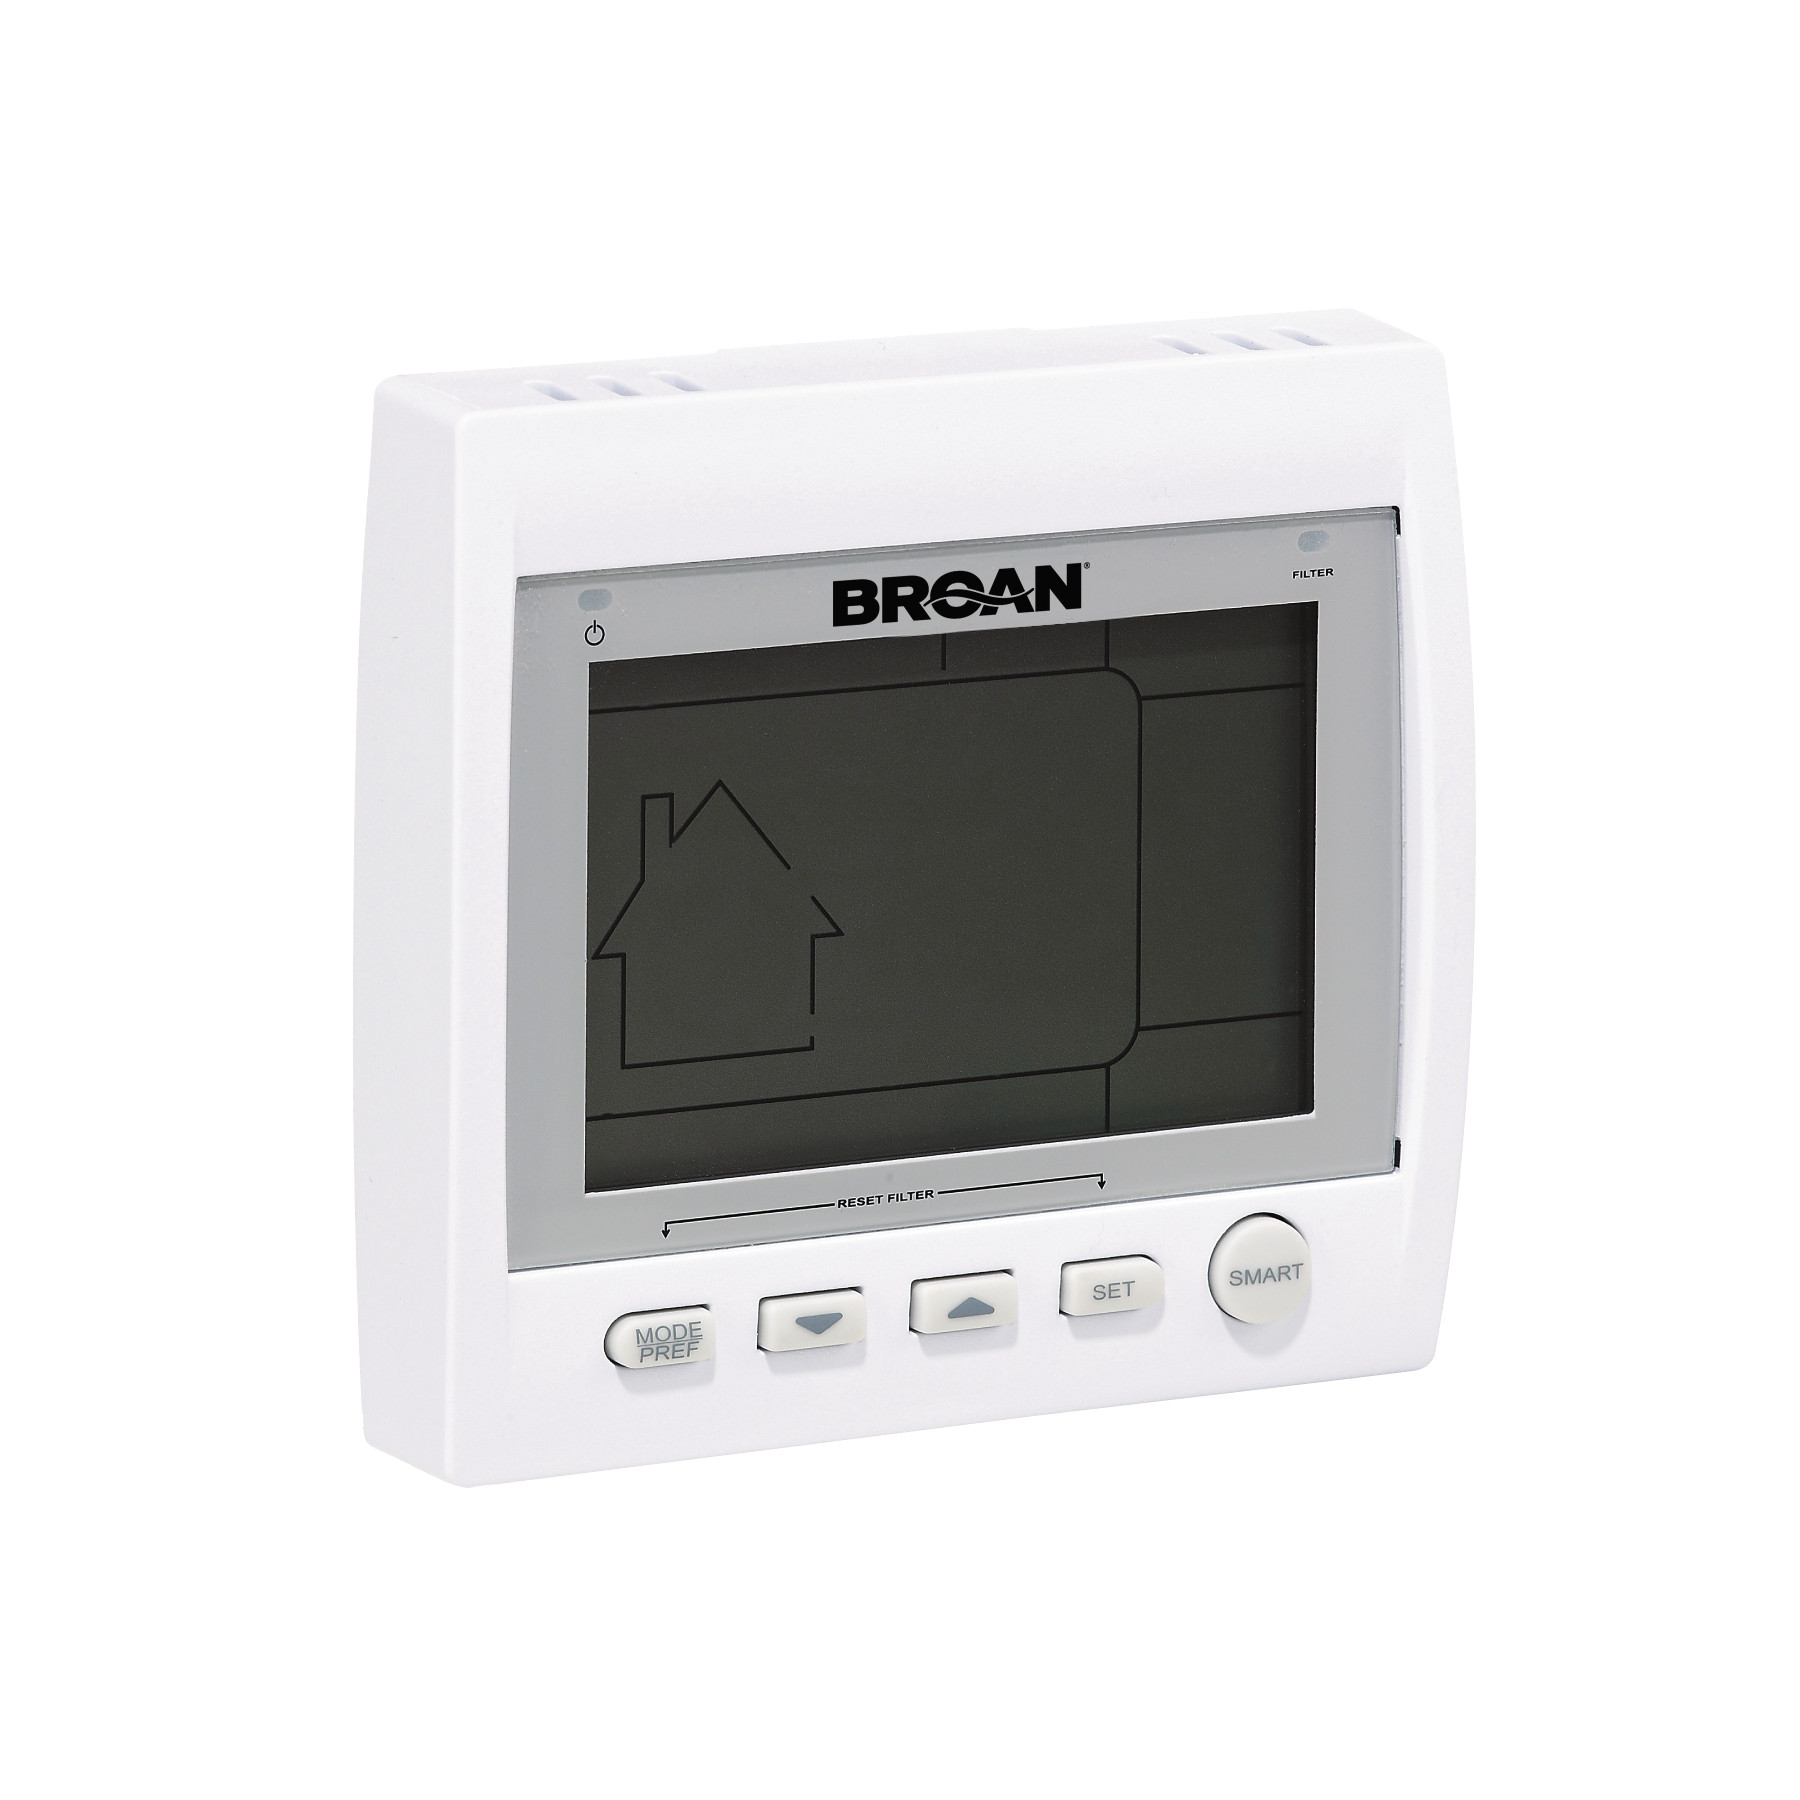 Broan® VT8W Programable Wall Control